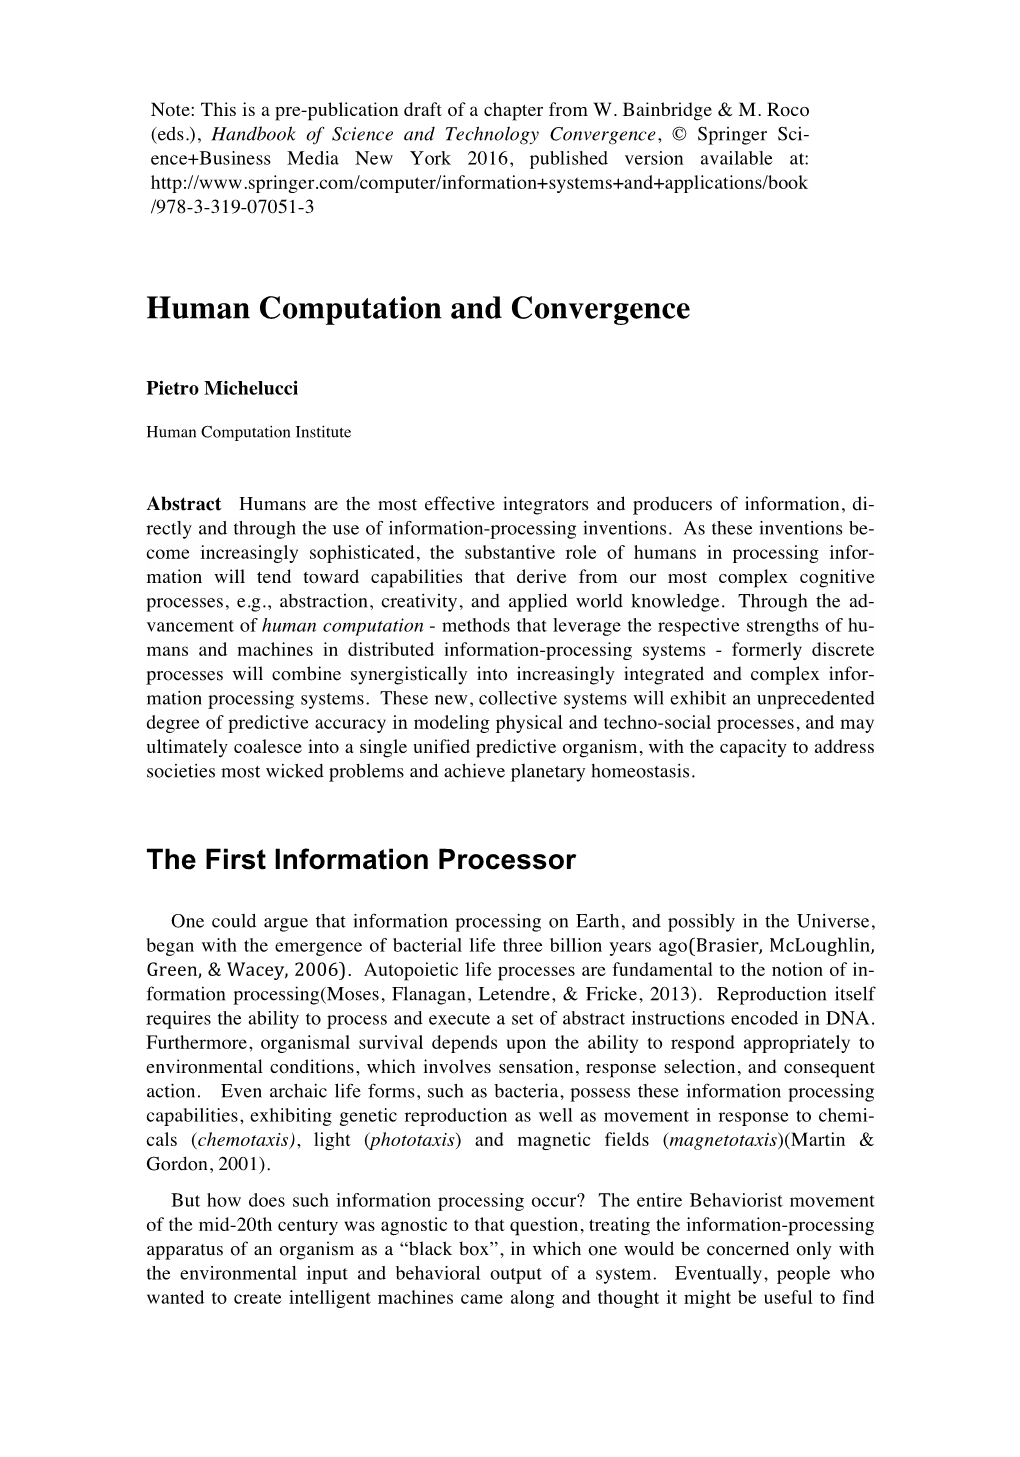 Human Computation and Convergence